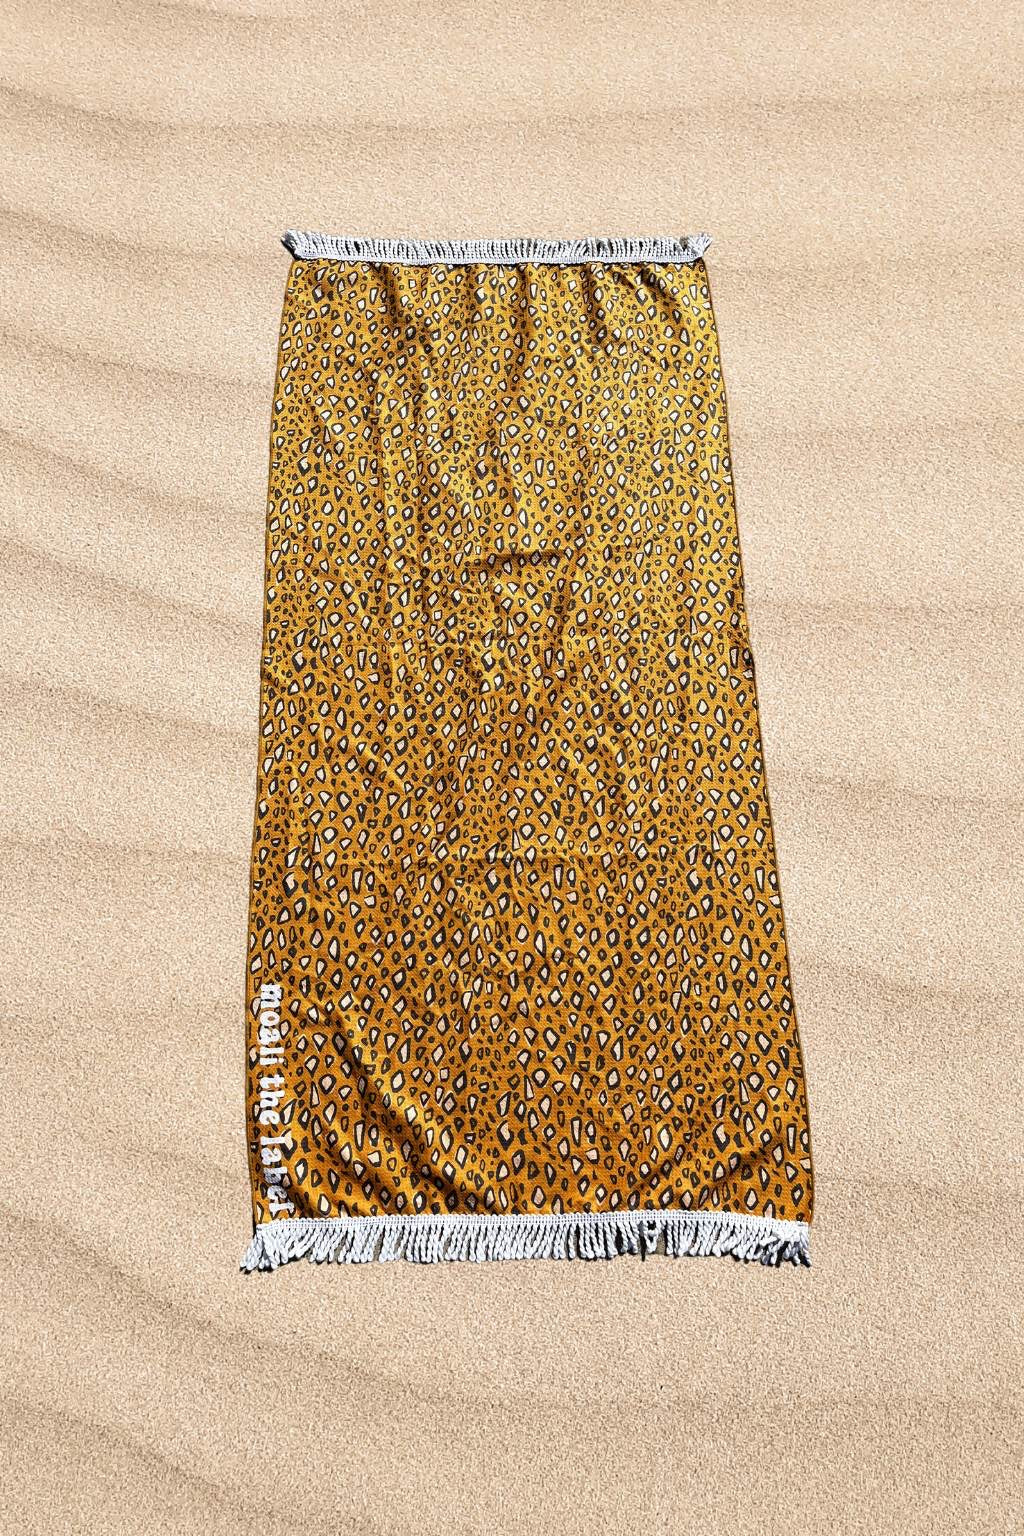 WILDE SAND FREE BEACH TOWEL